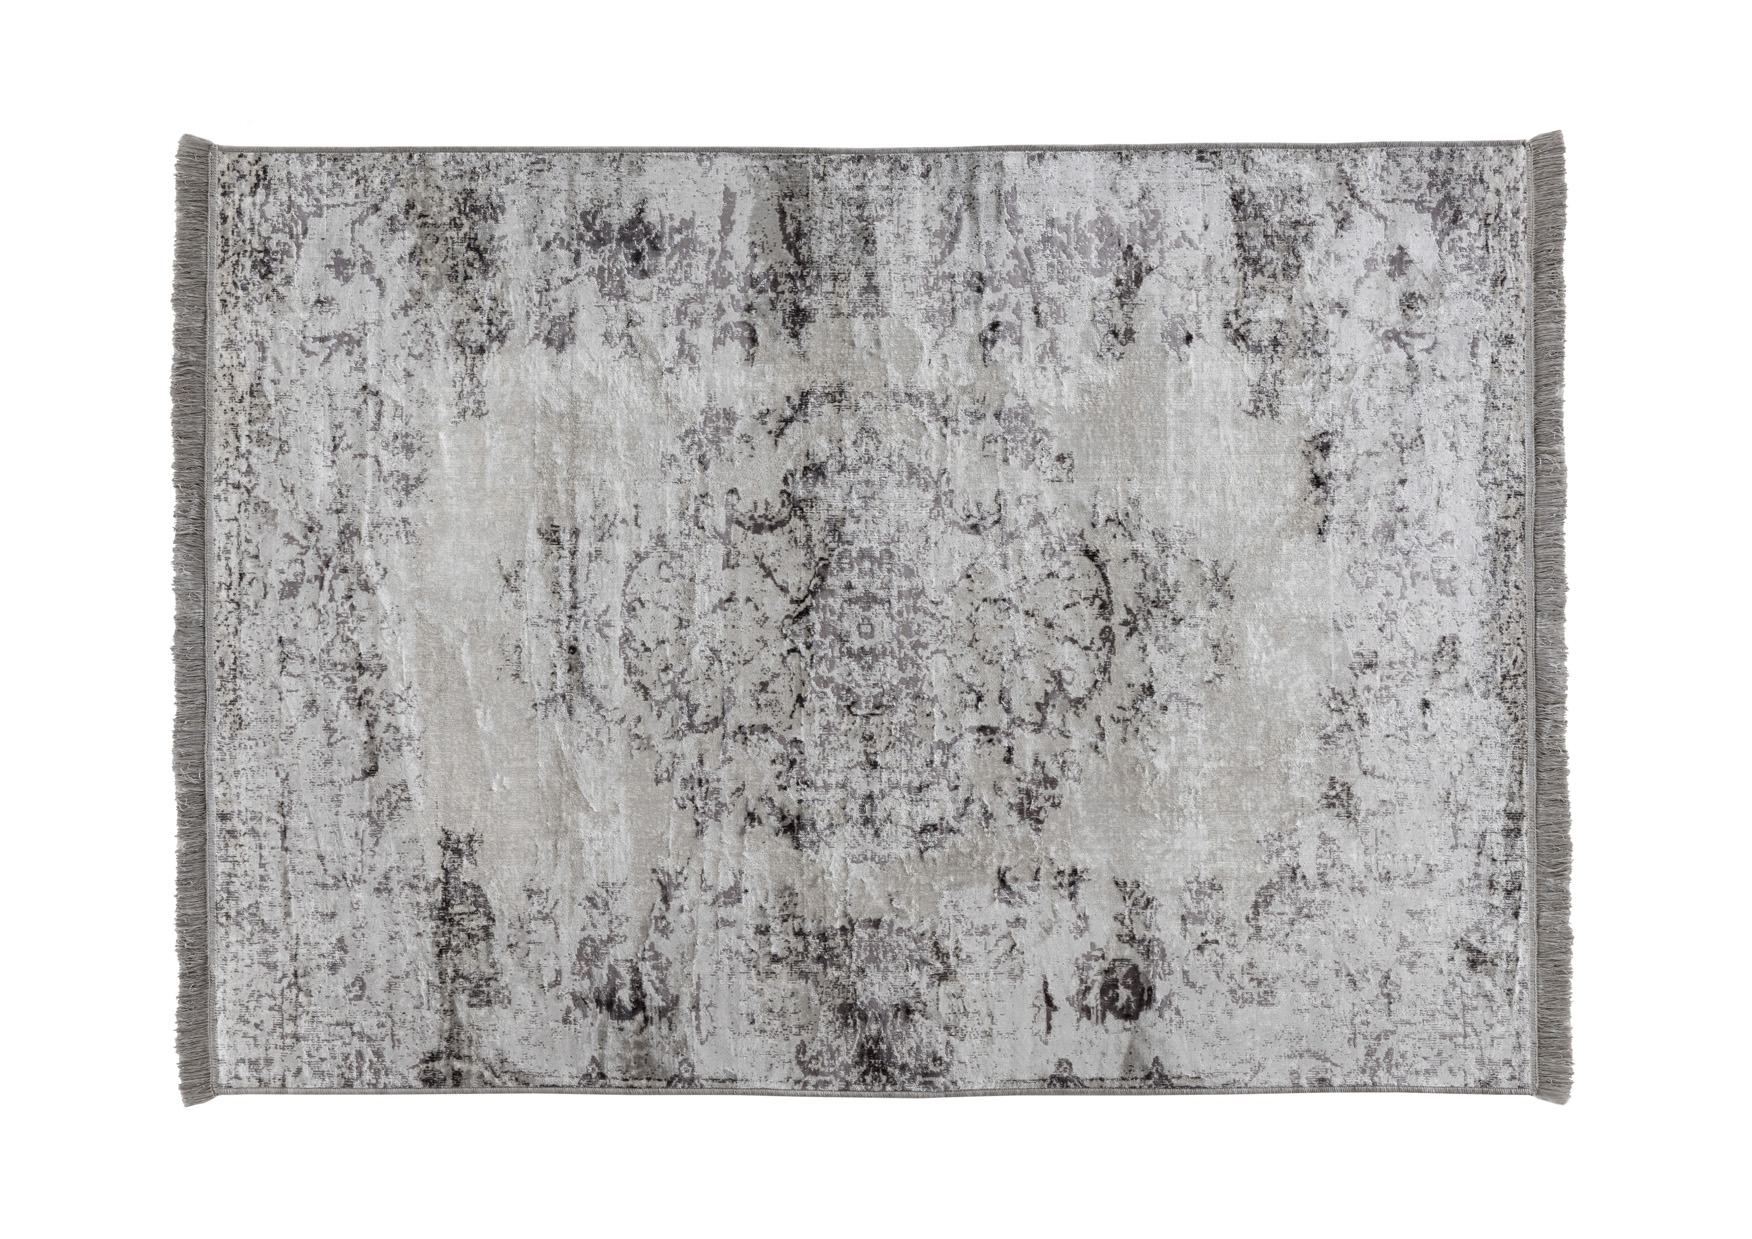 Vintage-Teppich VAN DYCK, 170 x 240 cm | grau | traditionelle Ornamente | Used-Look